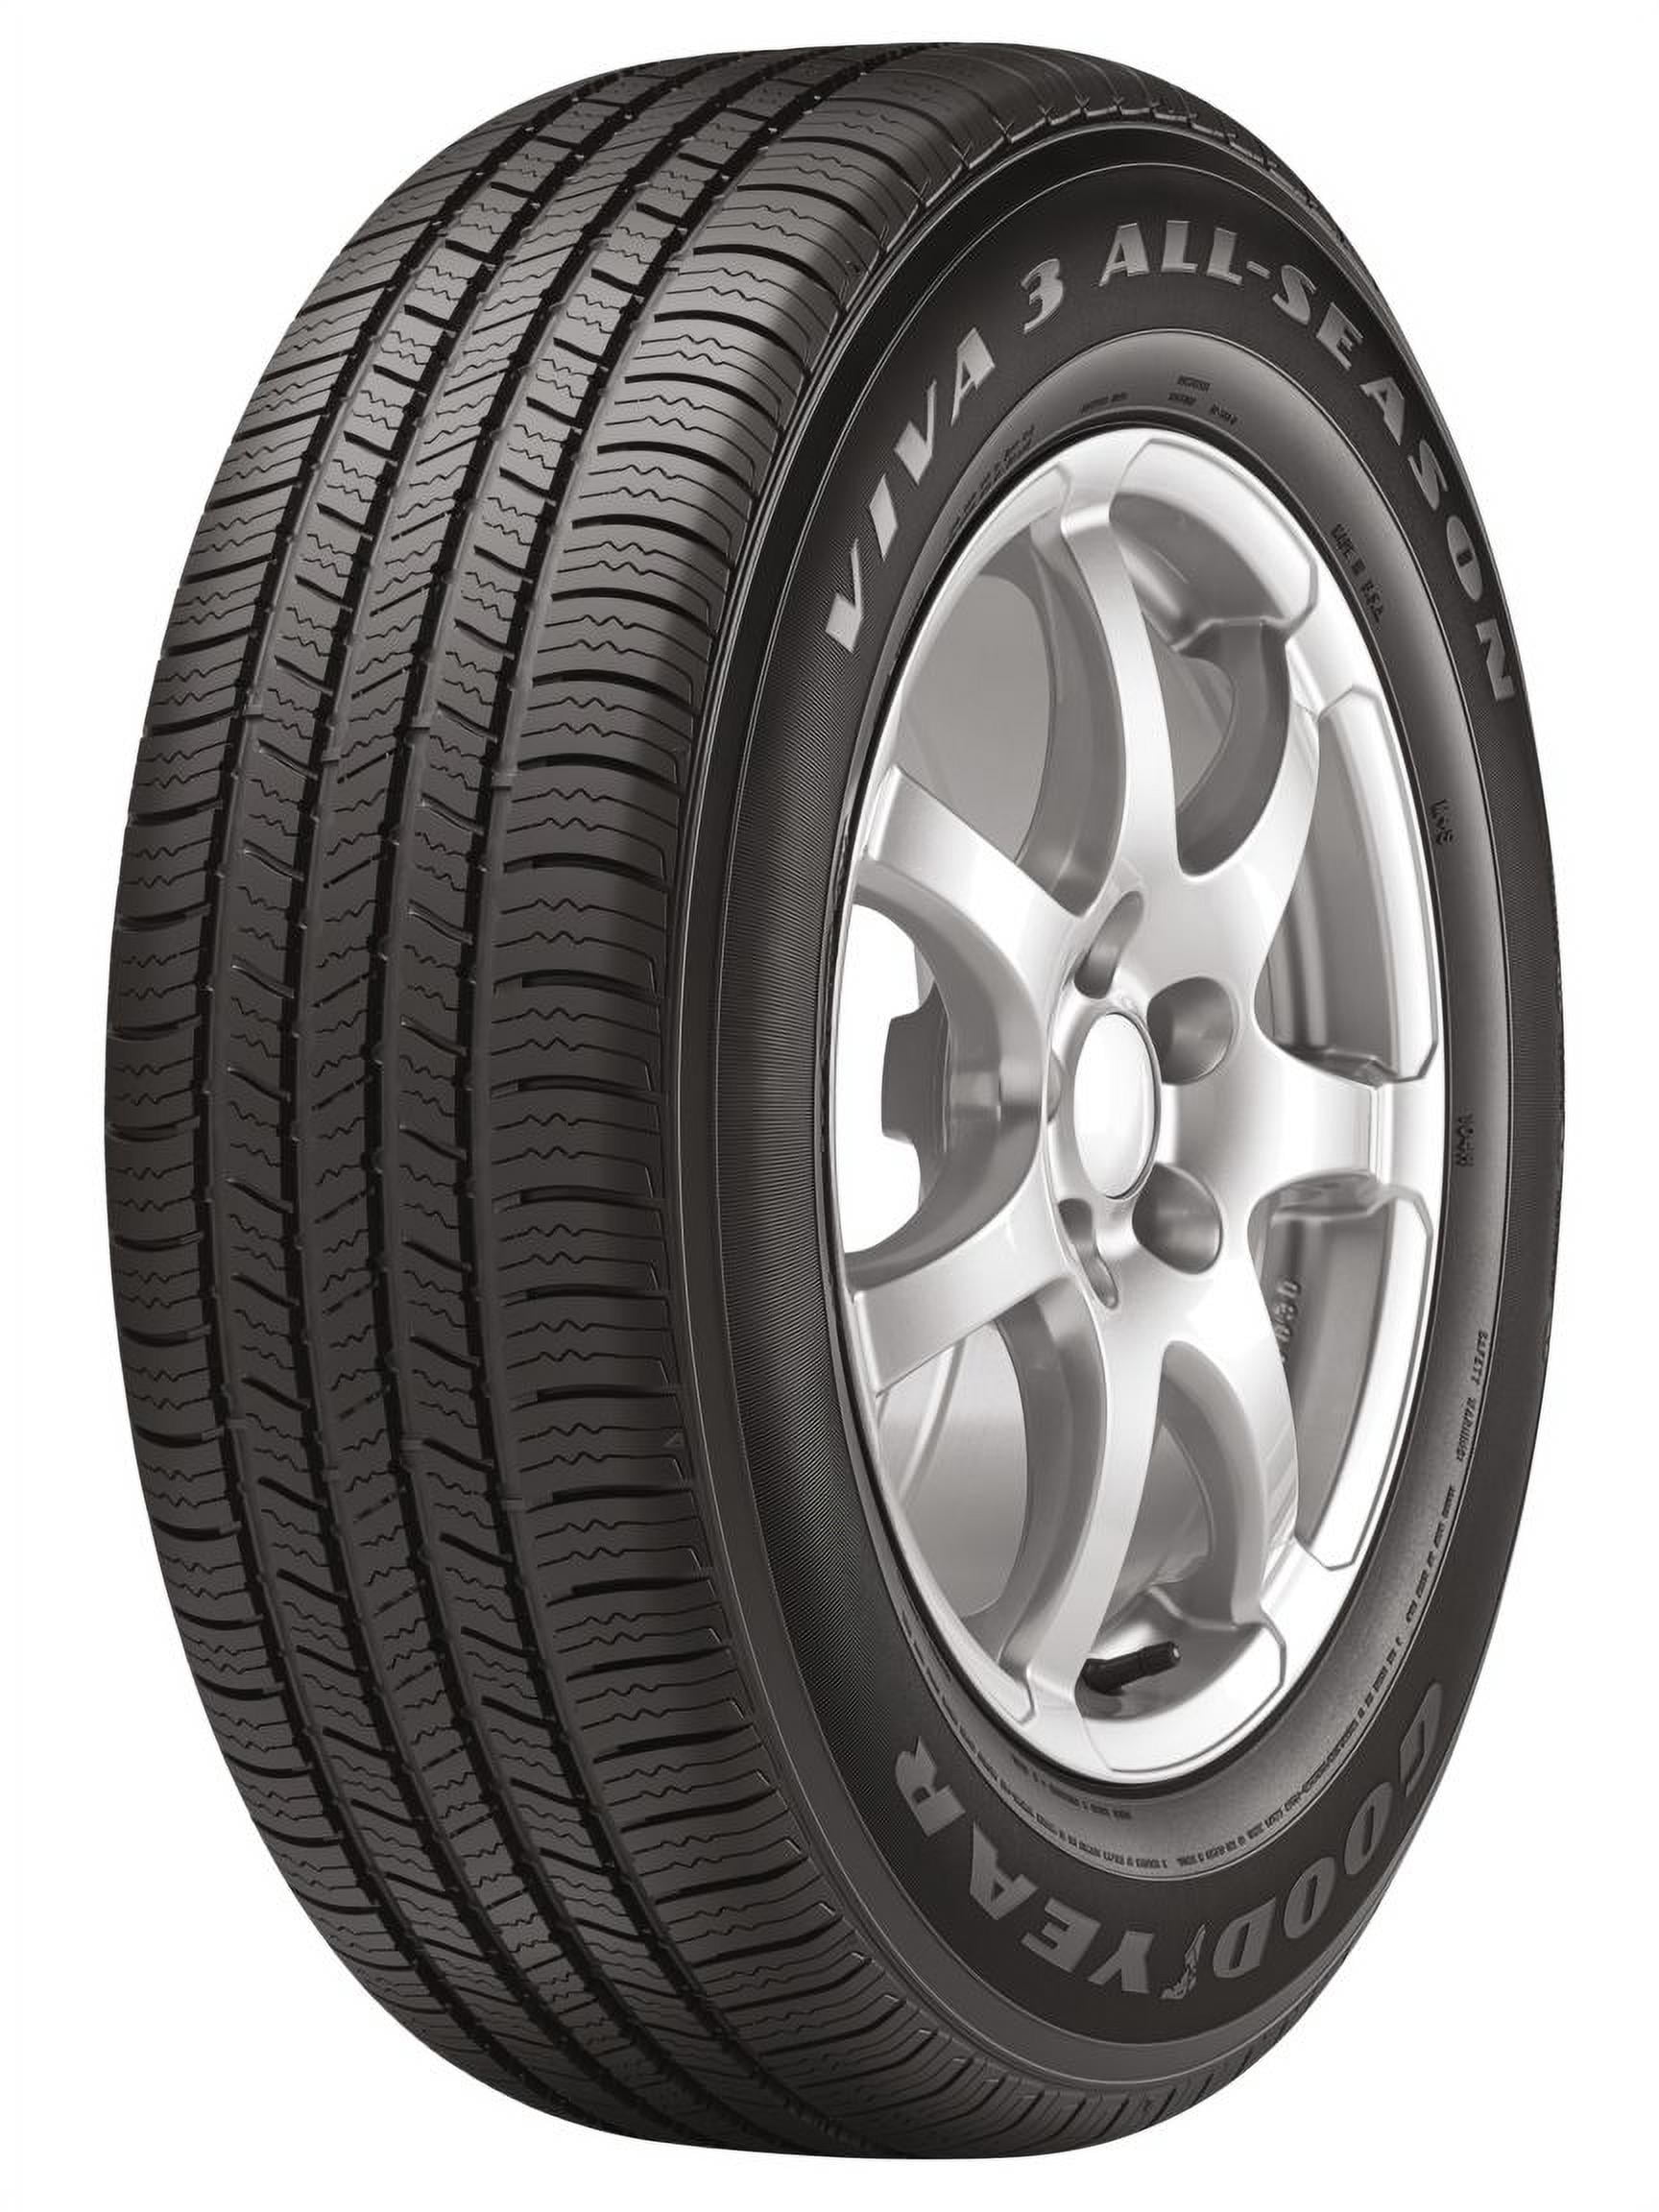 Goodyear Tires Viva 3 All-Season 215/65R16 98T Tire - Walmart.com